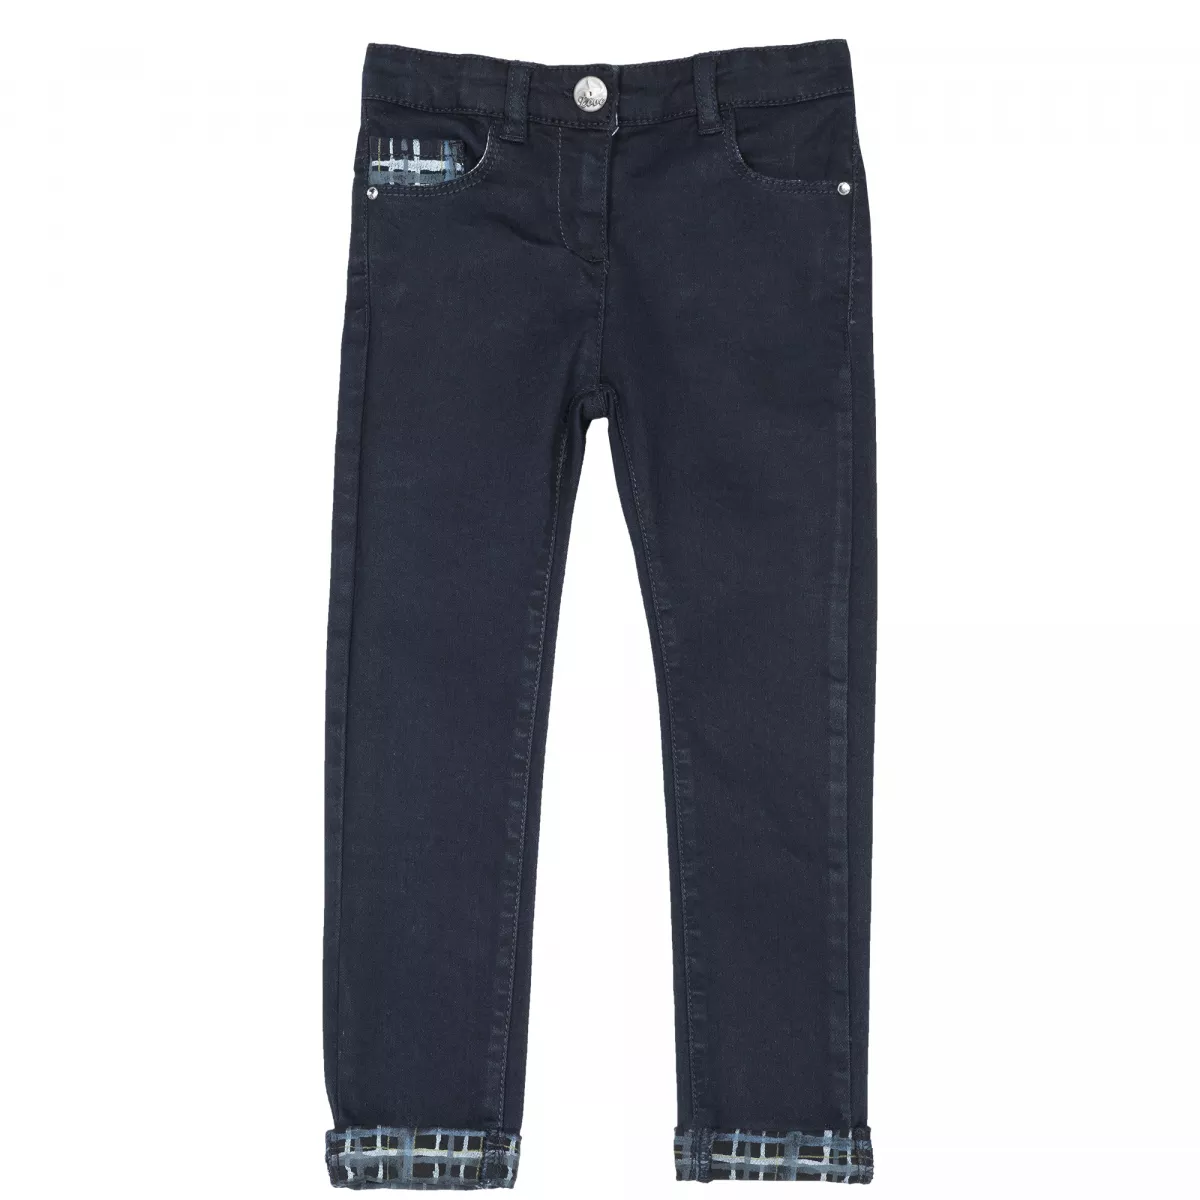 Pantaloni lungi jeans copii Chicco, albastru inchis, 92